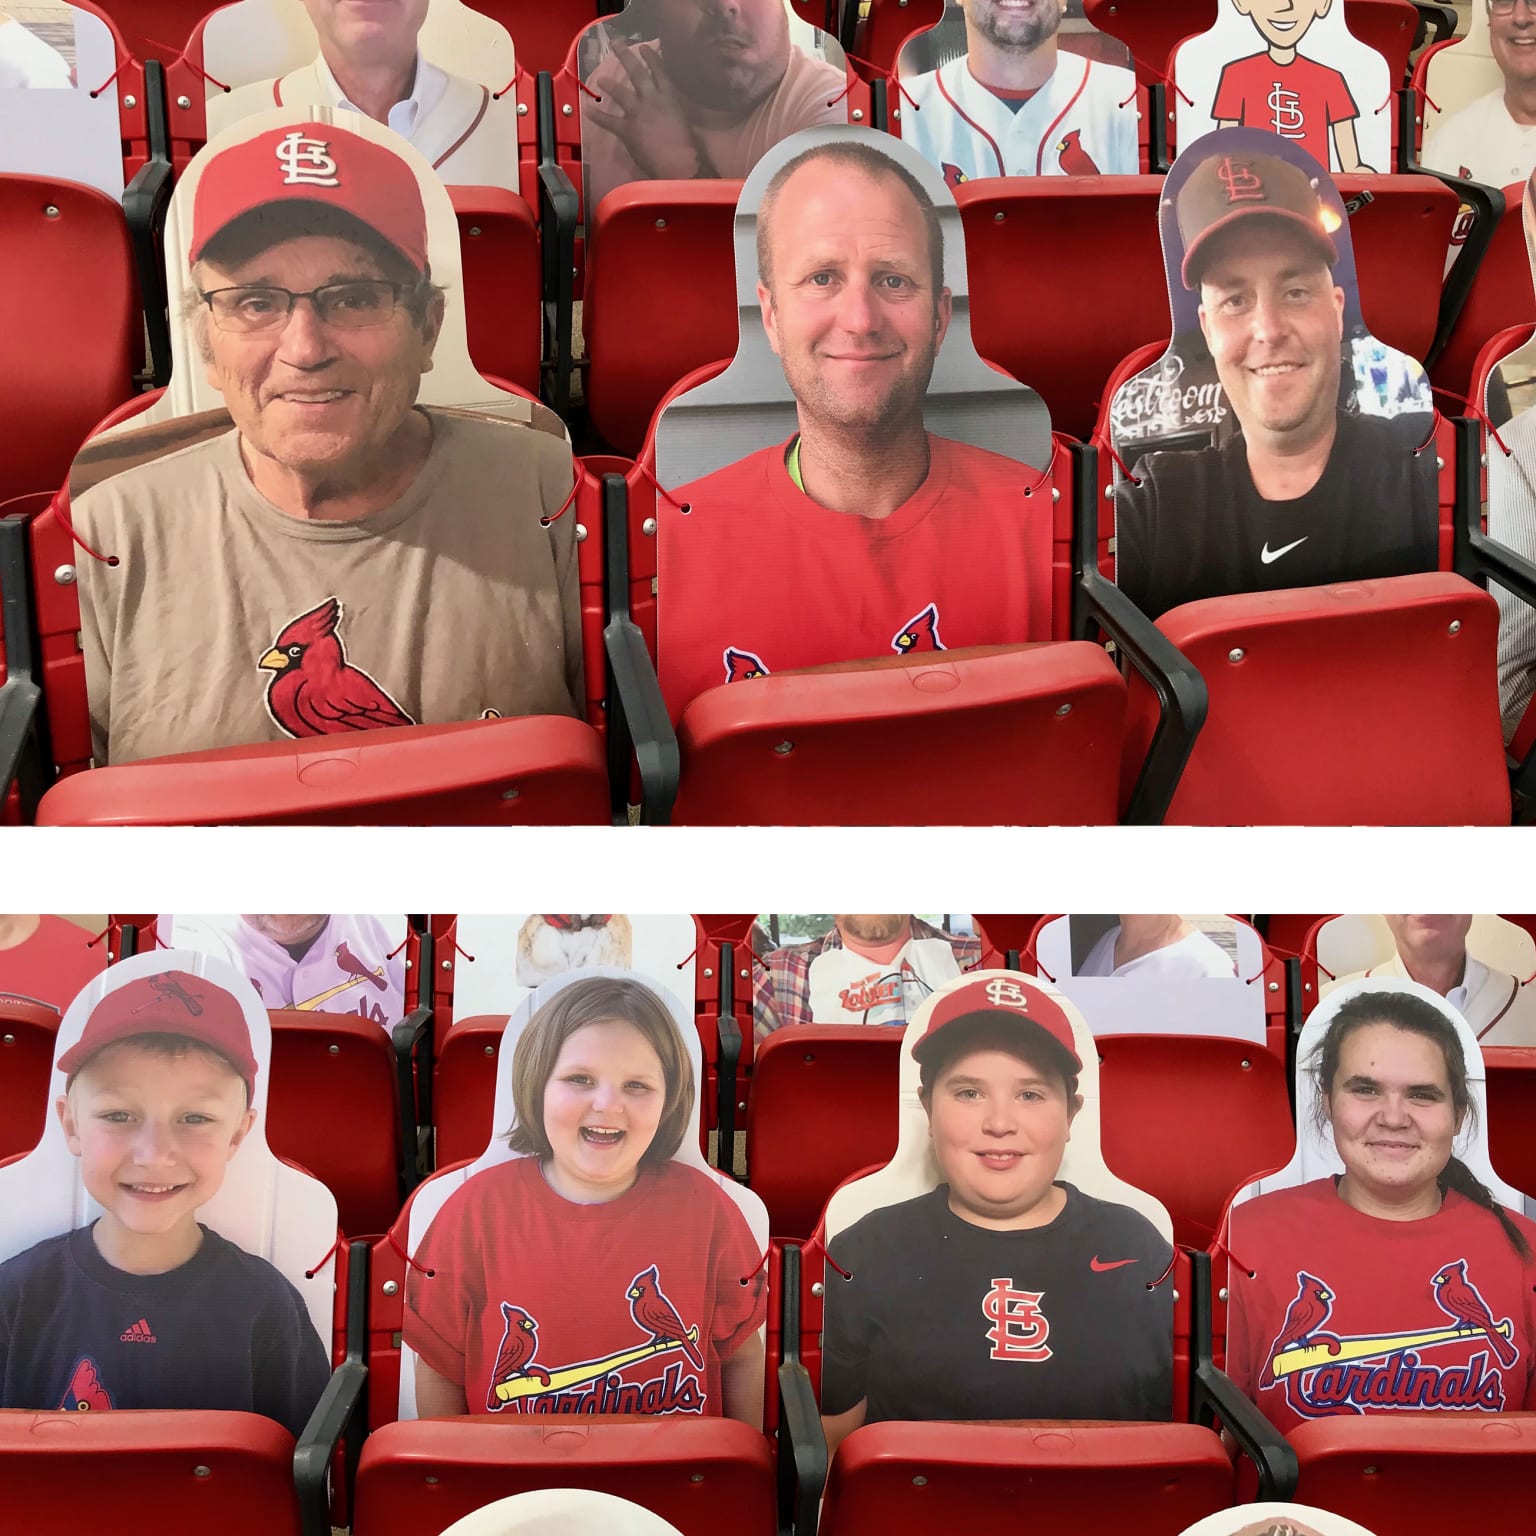 Grandma STL Cardinals Fan Cardinals Baseball St. Louis 